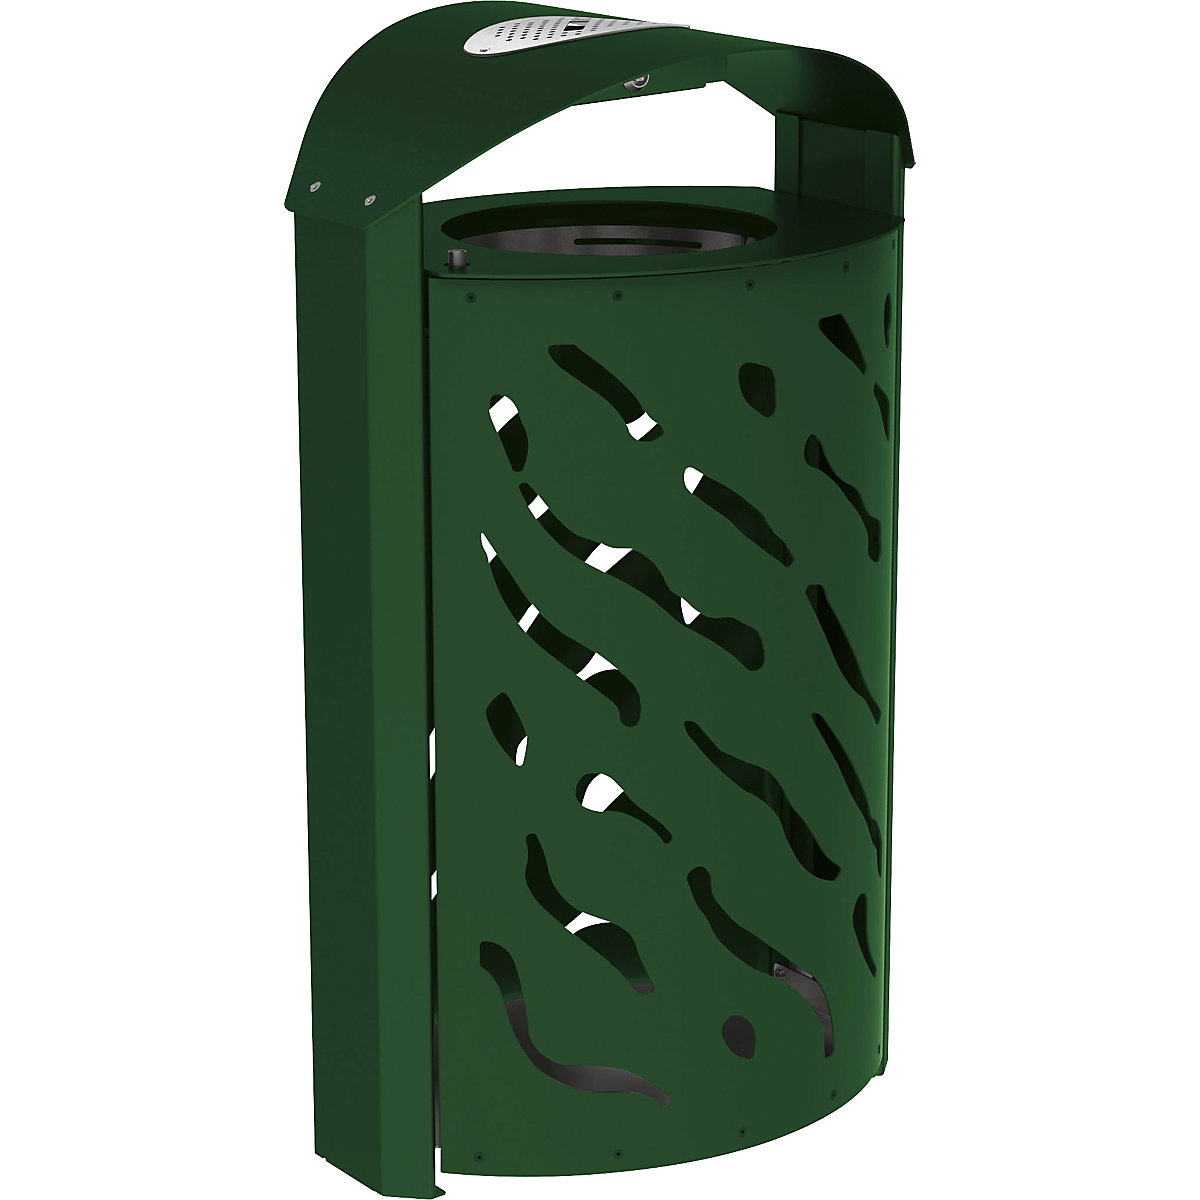 VENEDIG outdoor waste basket with ashtray – PROCITY